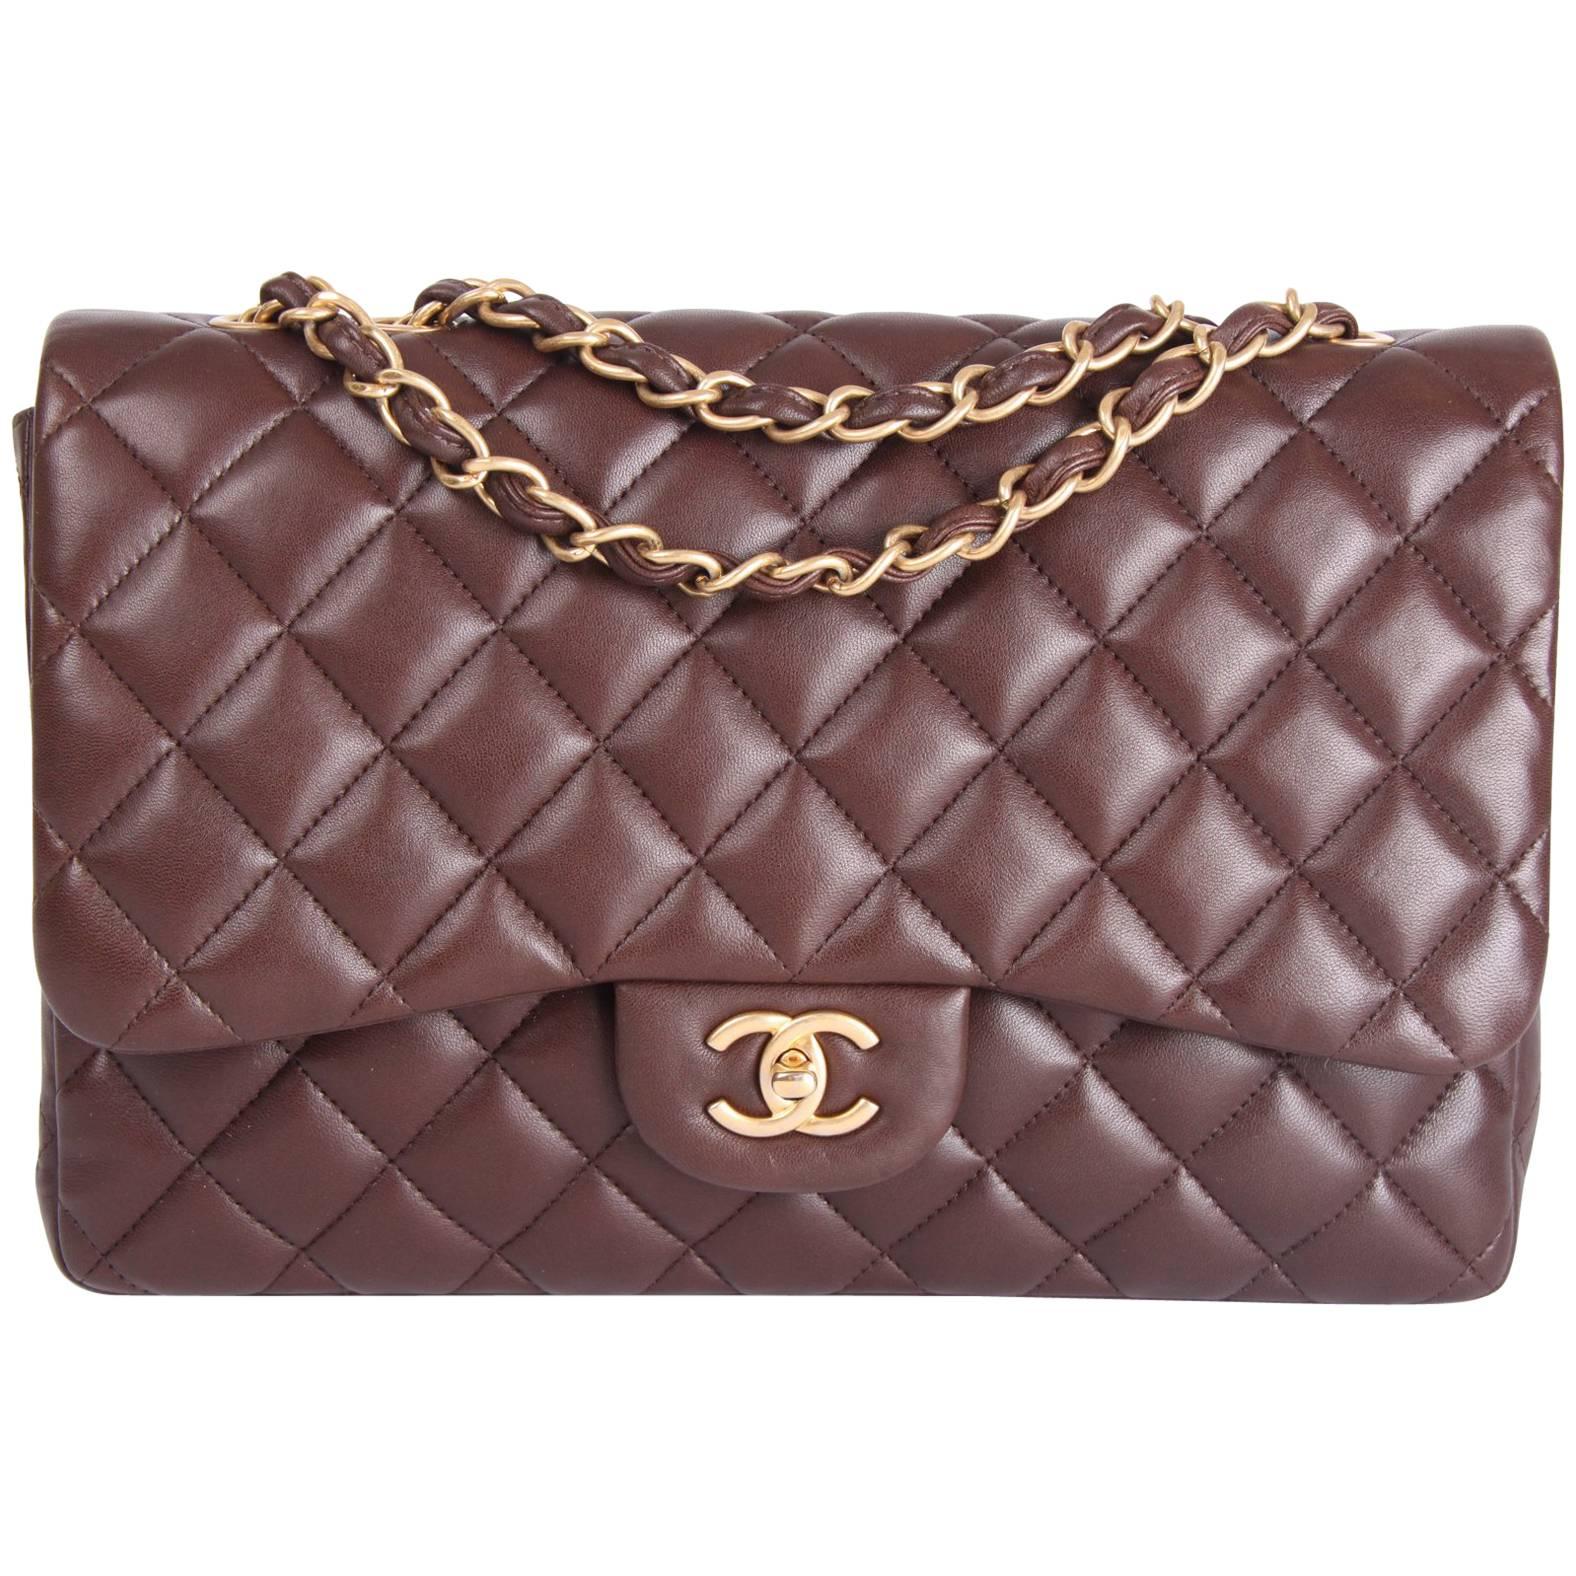 Chanel 2.55 Timeless Jumbo Single Flap Bag - brown leather